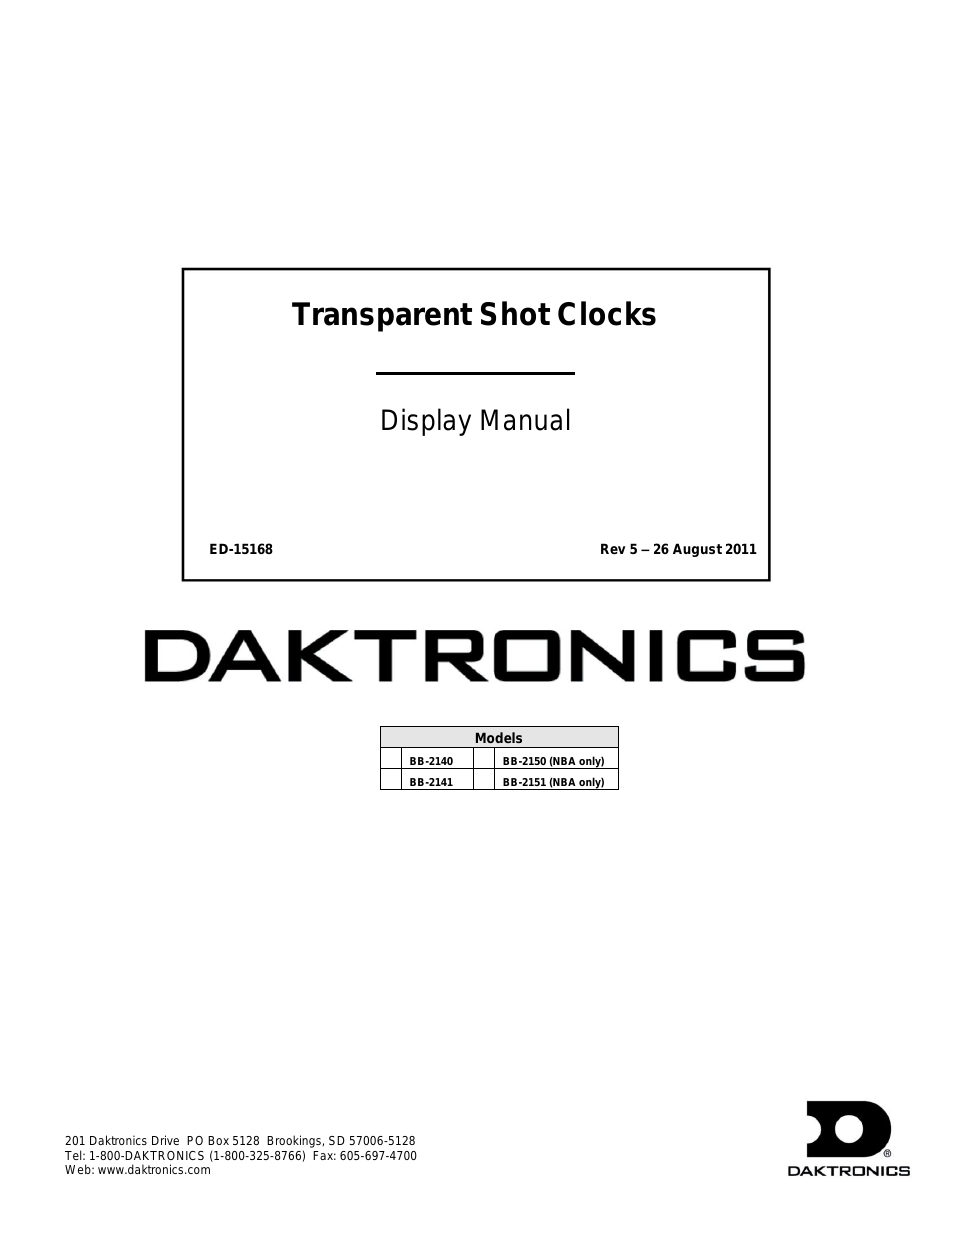 BB-2151 (NBA only) Transparent Shot Clock